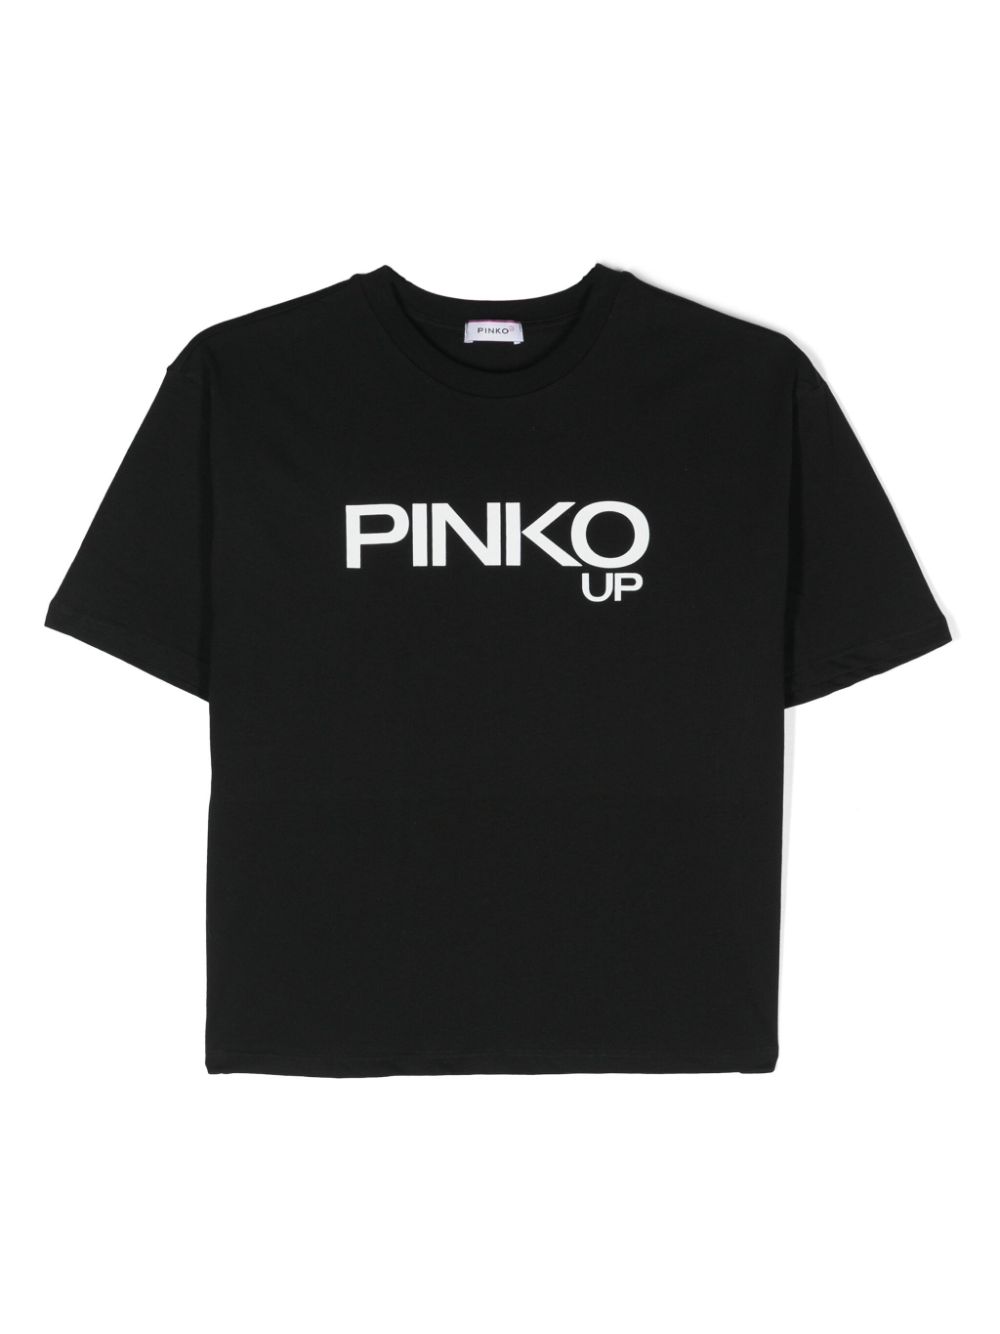 Black t-shirt for girls with white logo